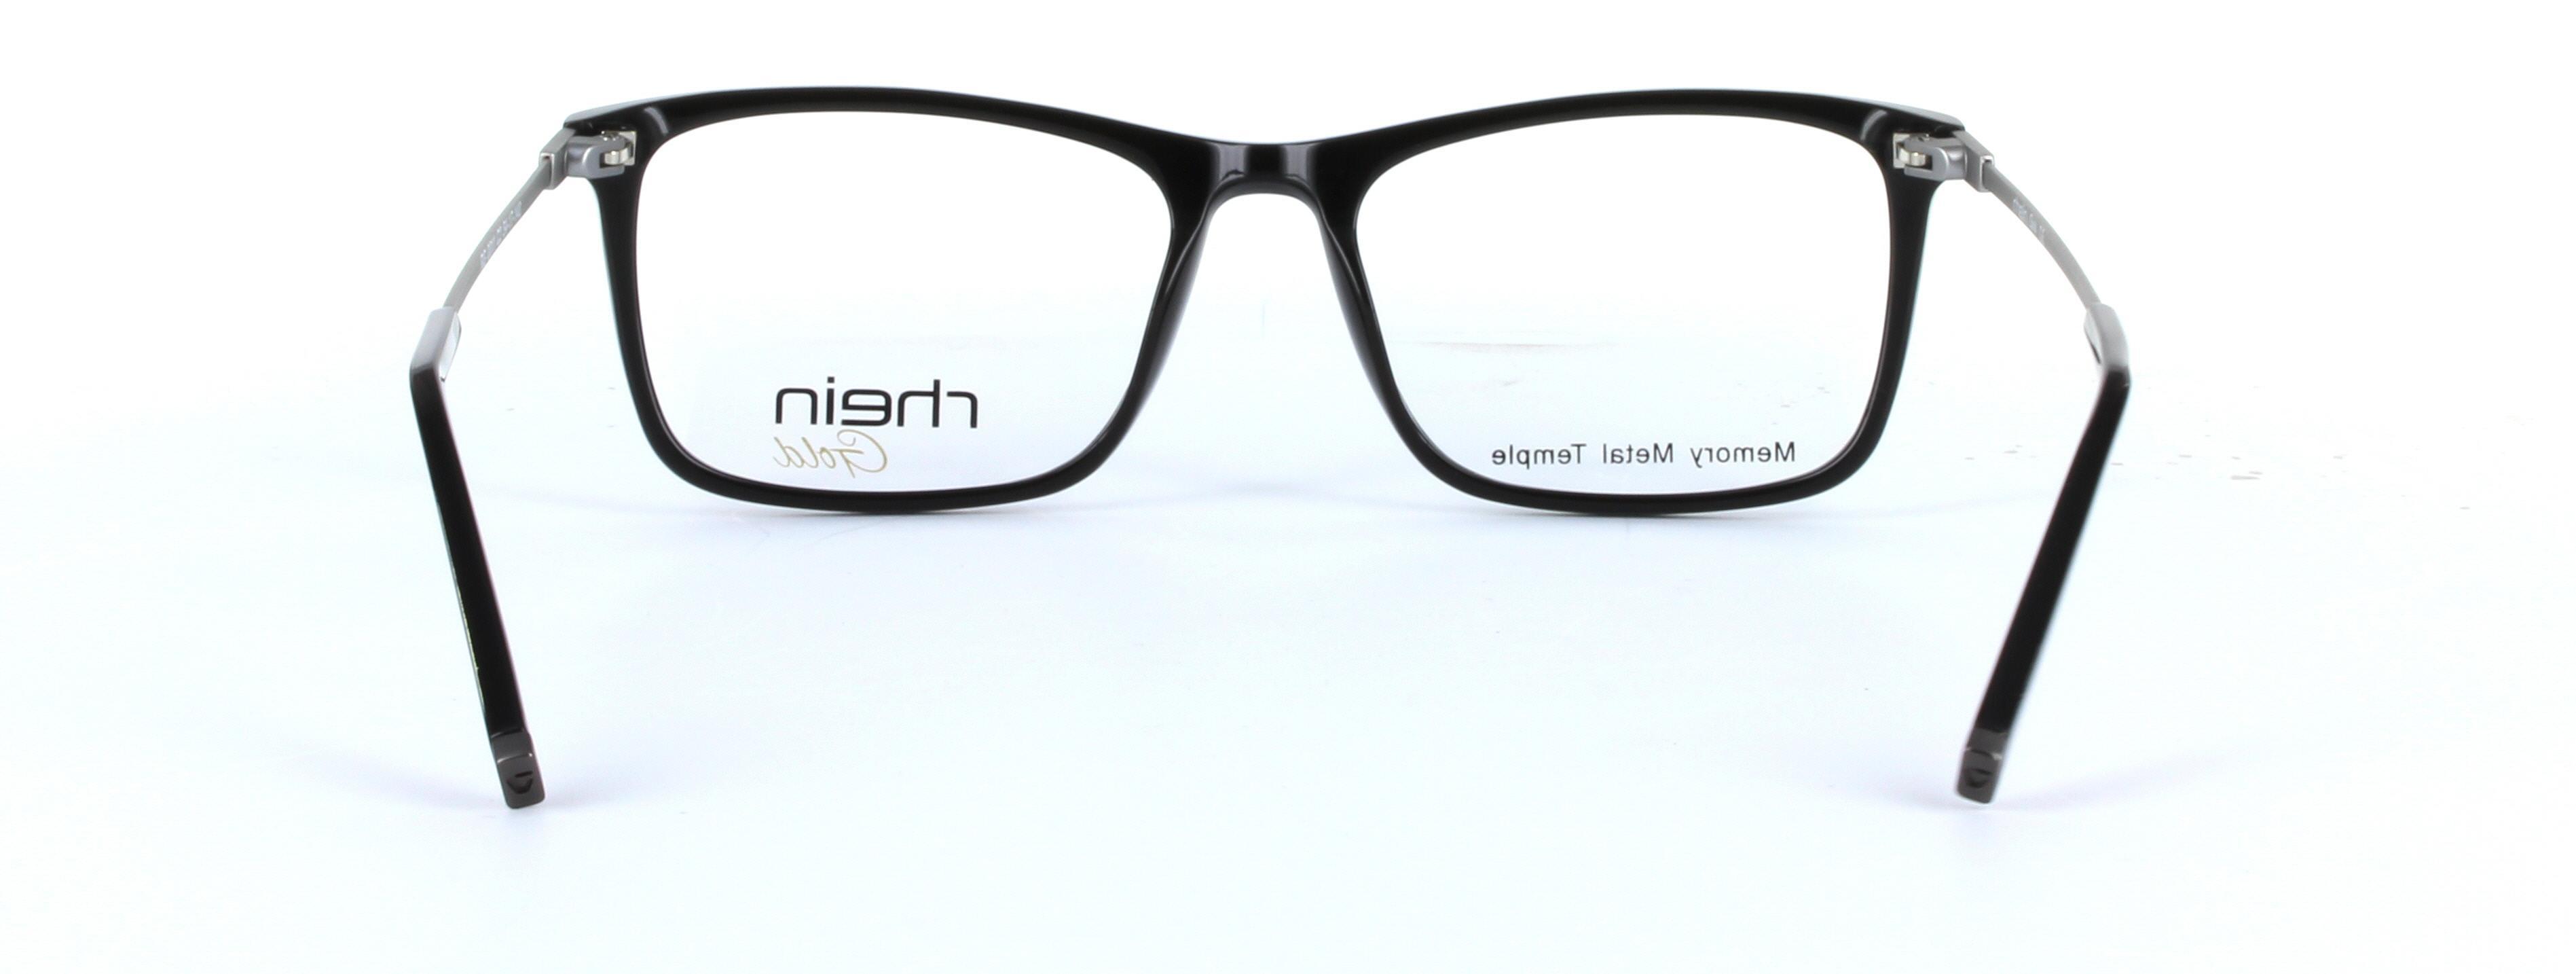 Chatsworth Black Full Rim Square Plastic Glasses - Image View 3